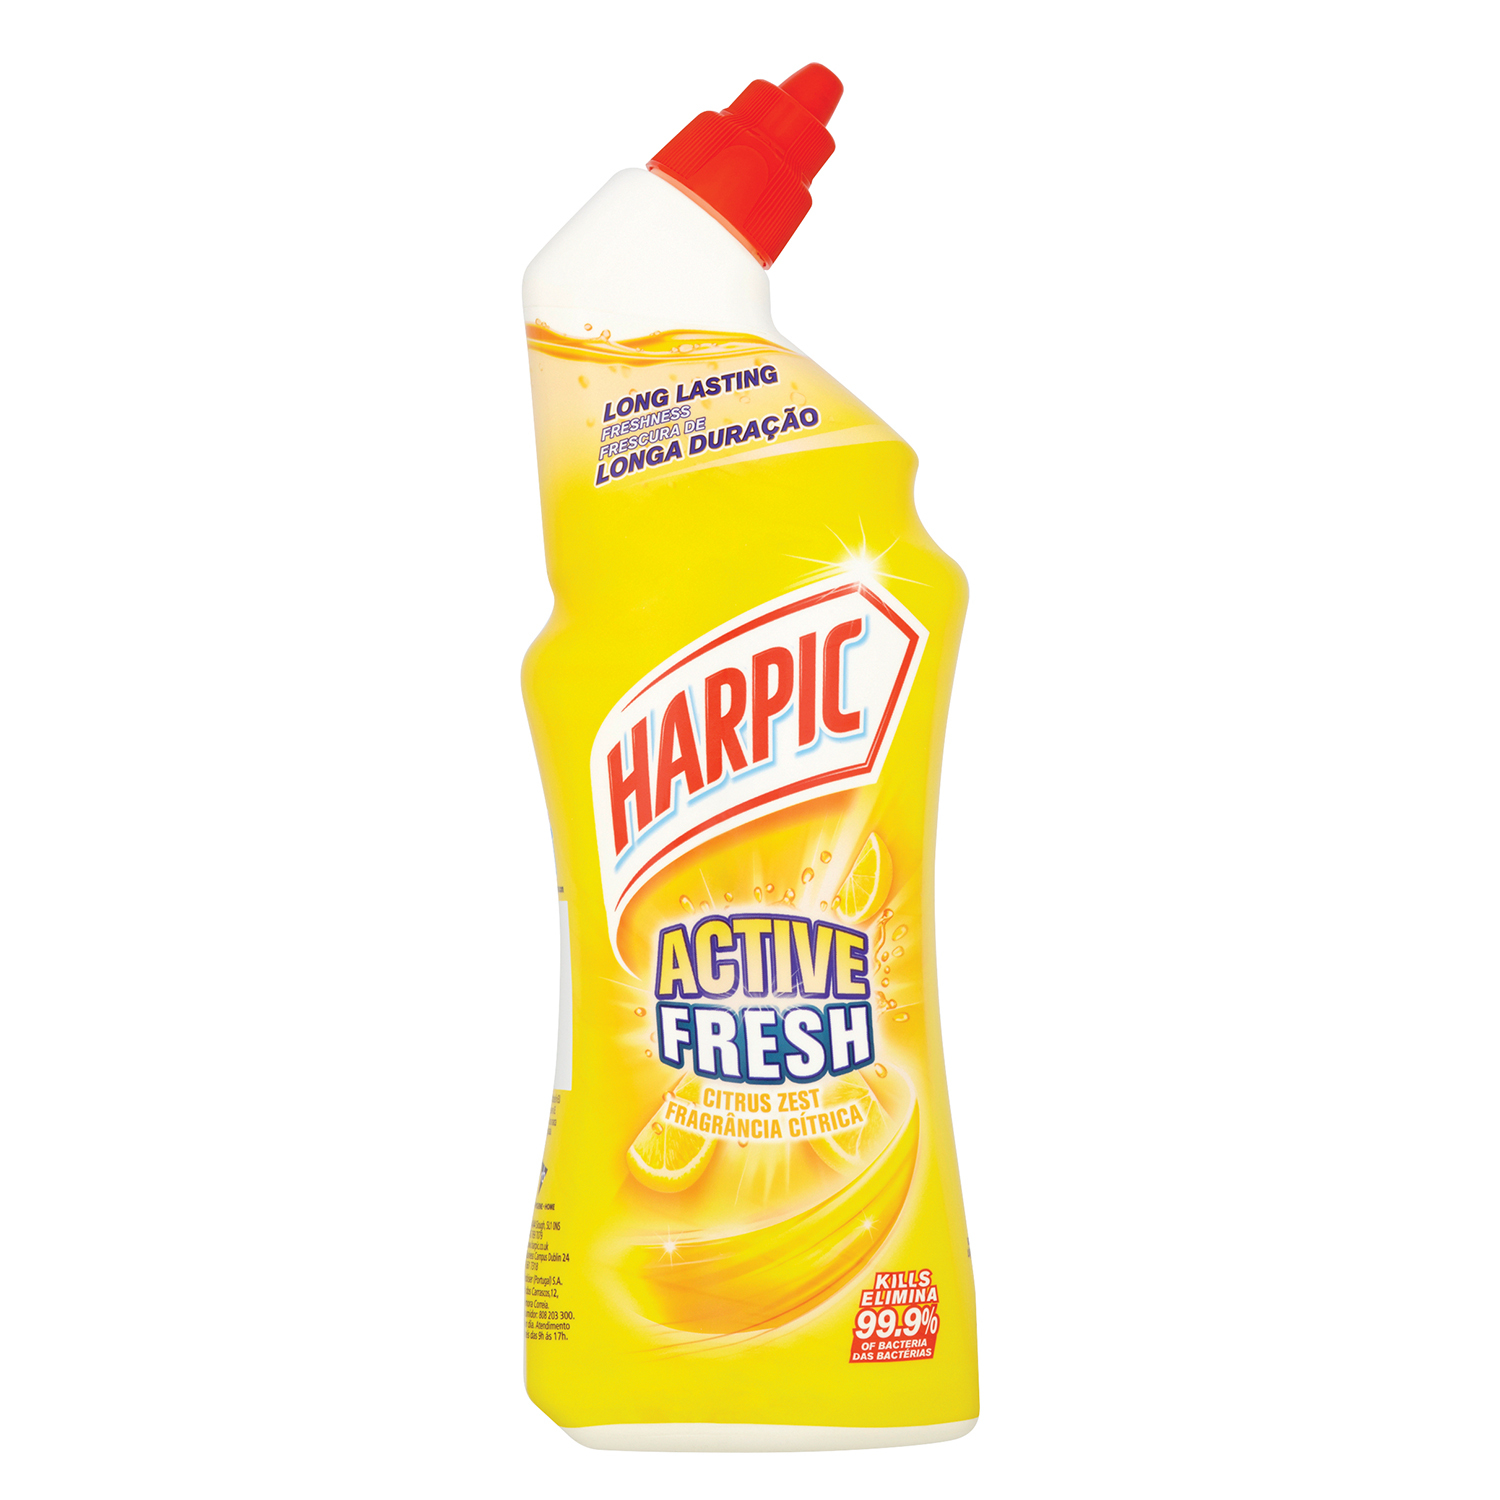 Harpic Active Fresh Cleaning Gel 750ml - Citrus Zest Image